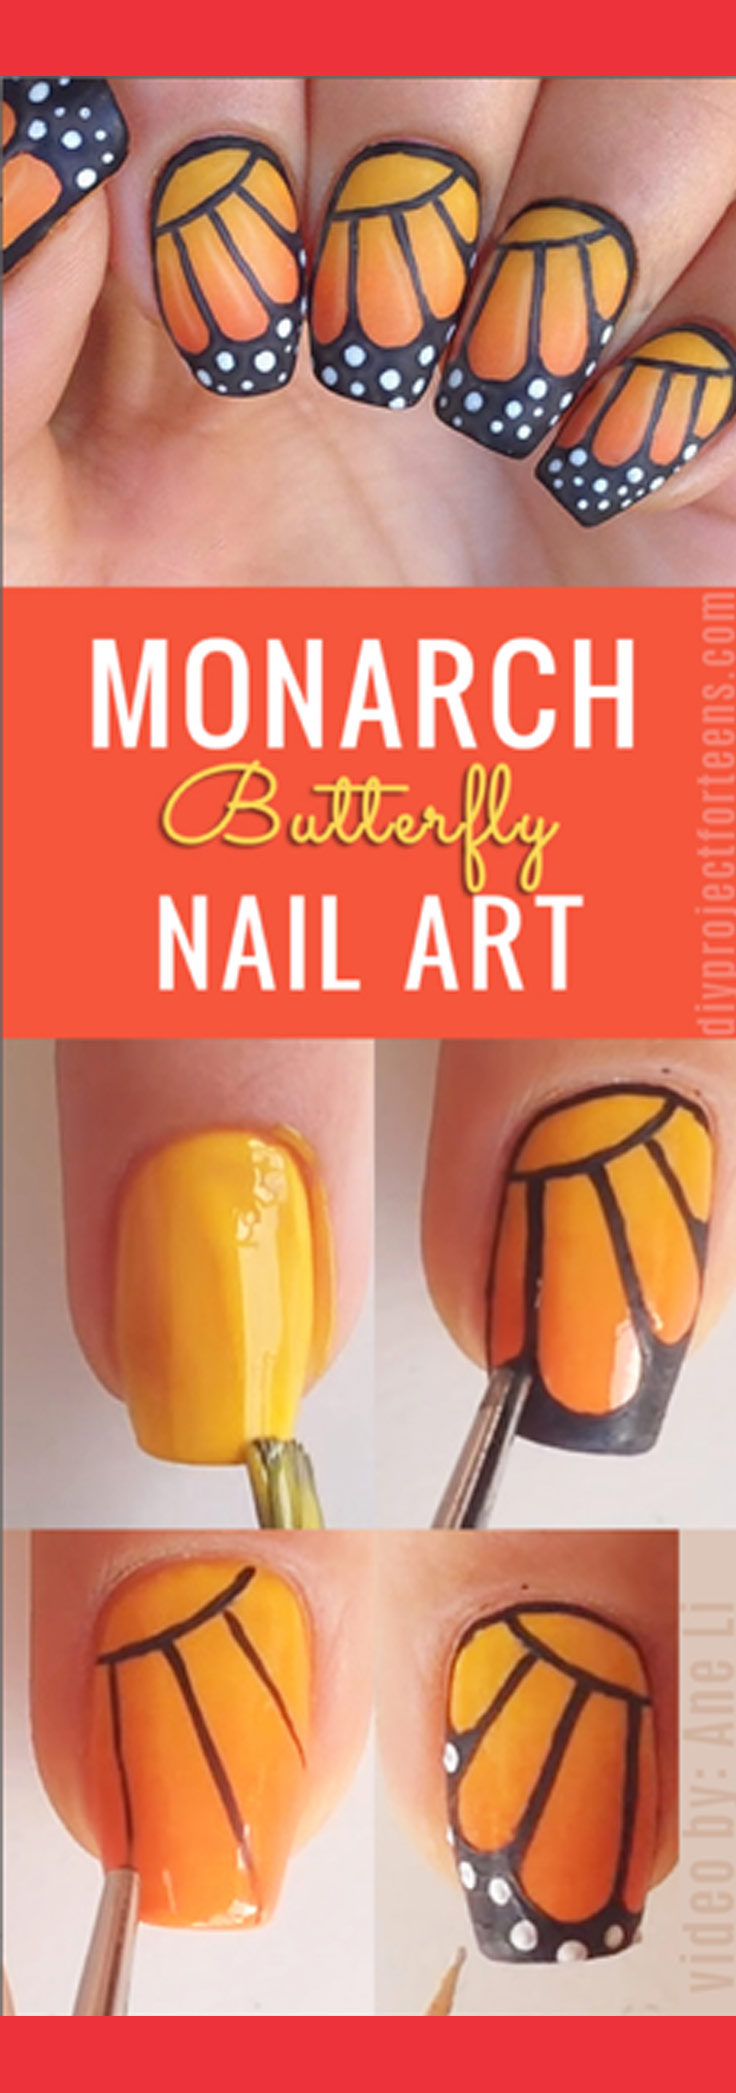 DIY Nail Art Ideas - Monarch Butterfly Nail Design Instructions & Tutorial